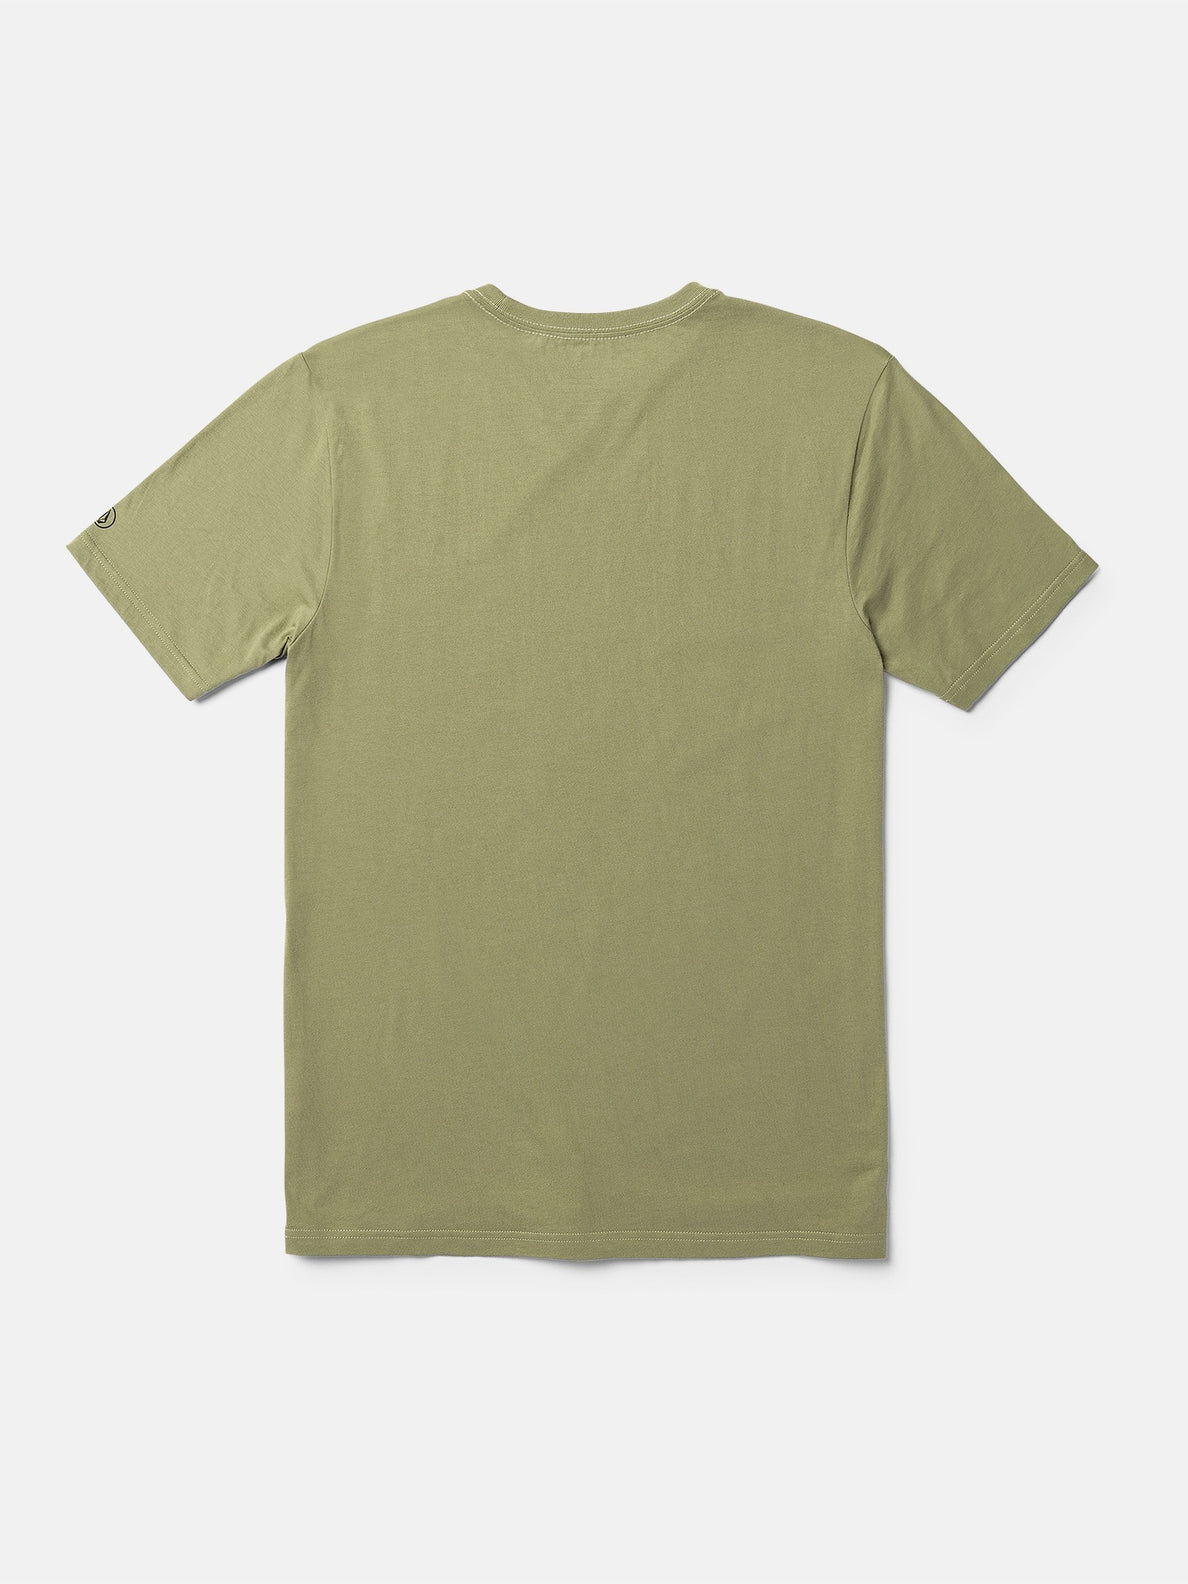 Solid Short Sleeve Tee - Thyme Green